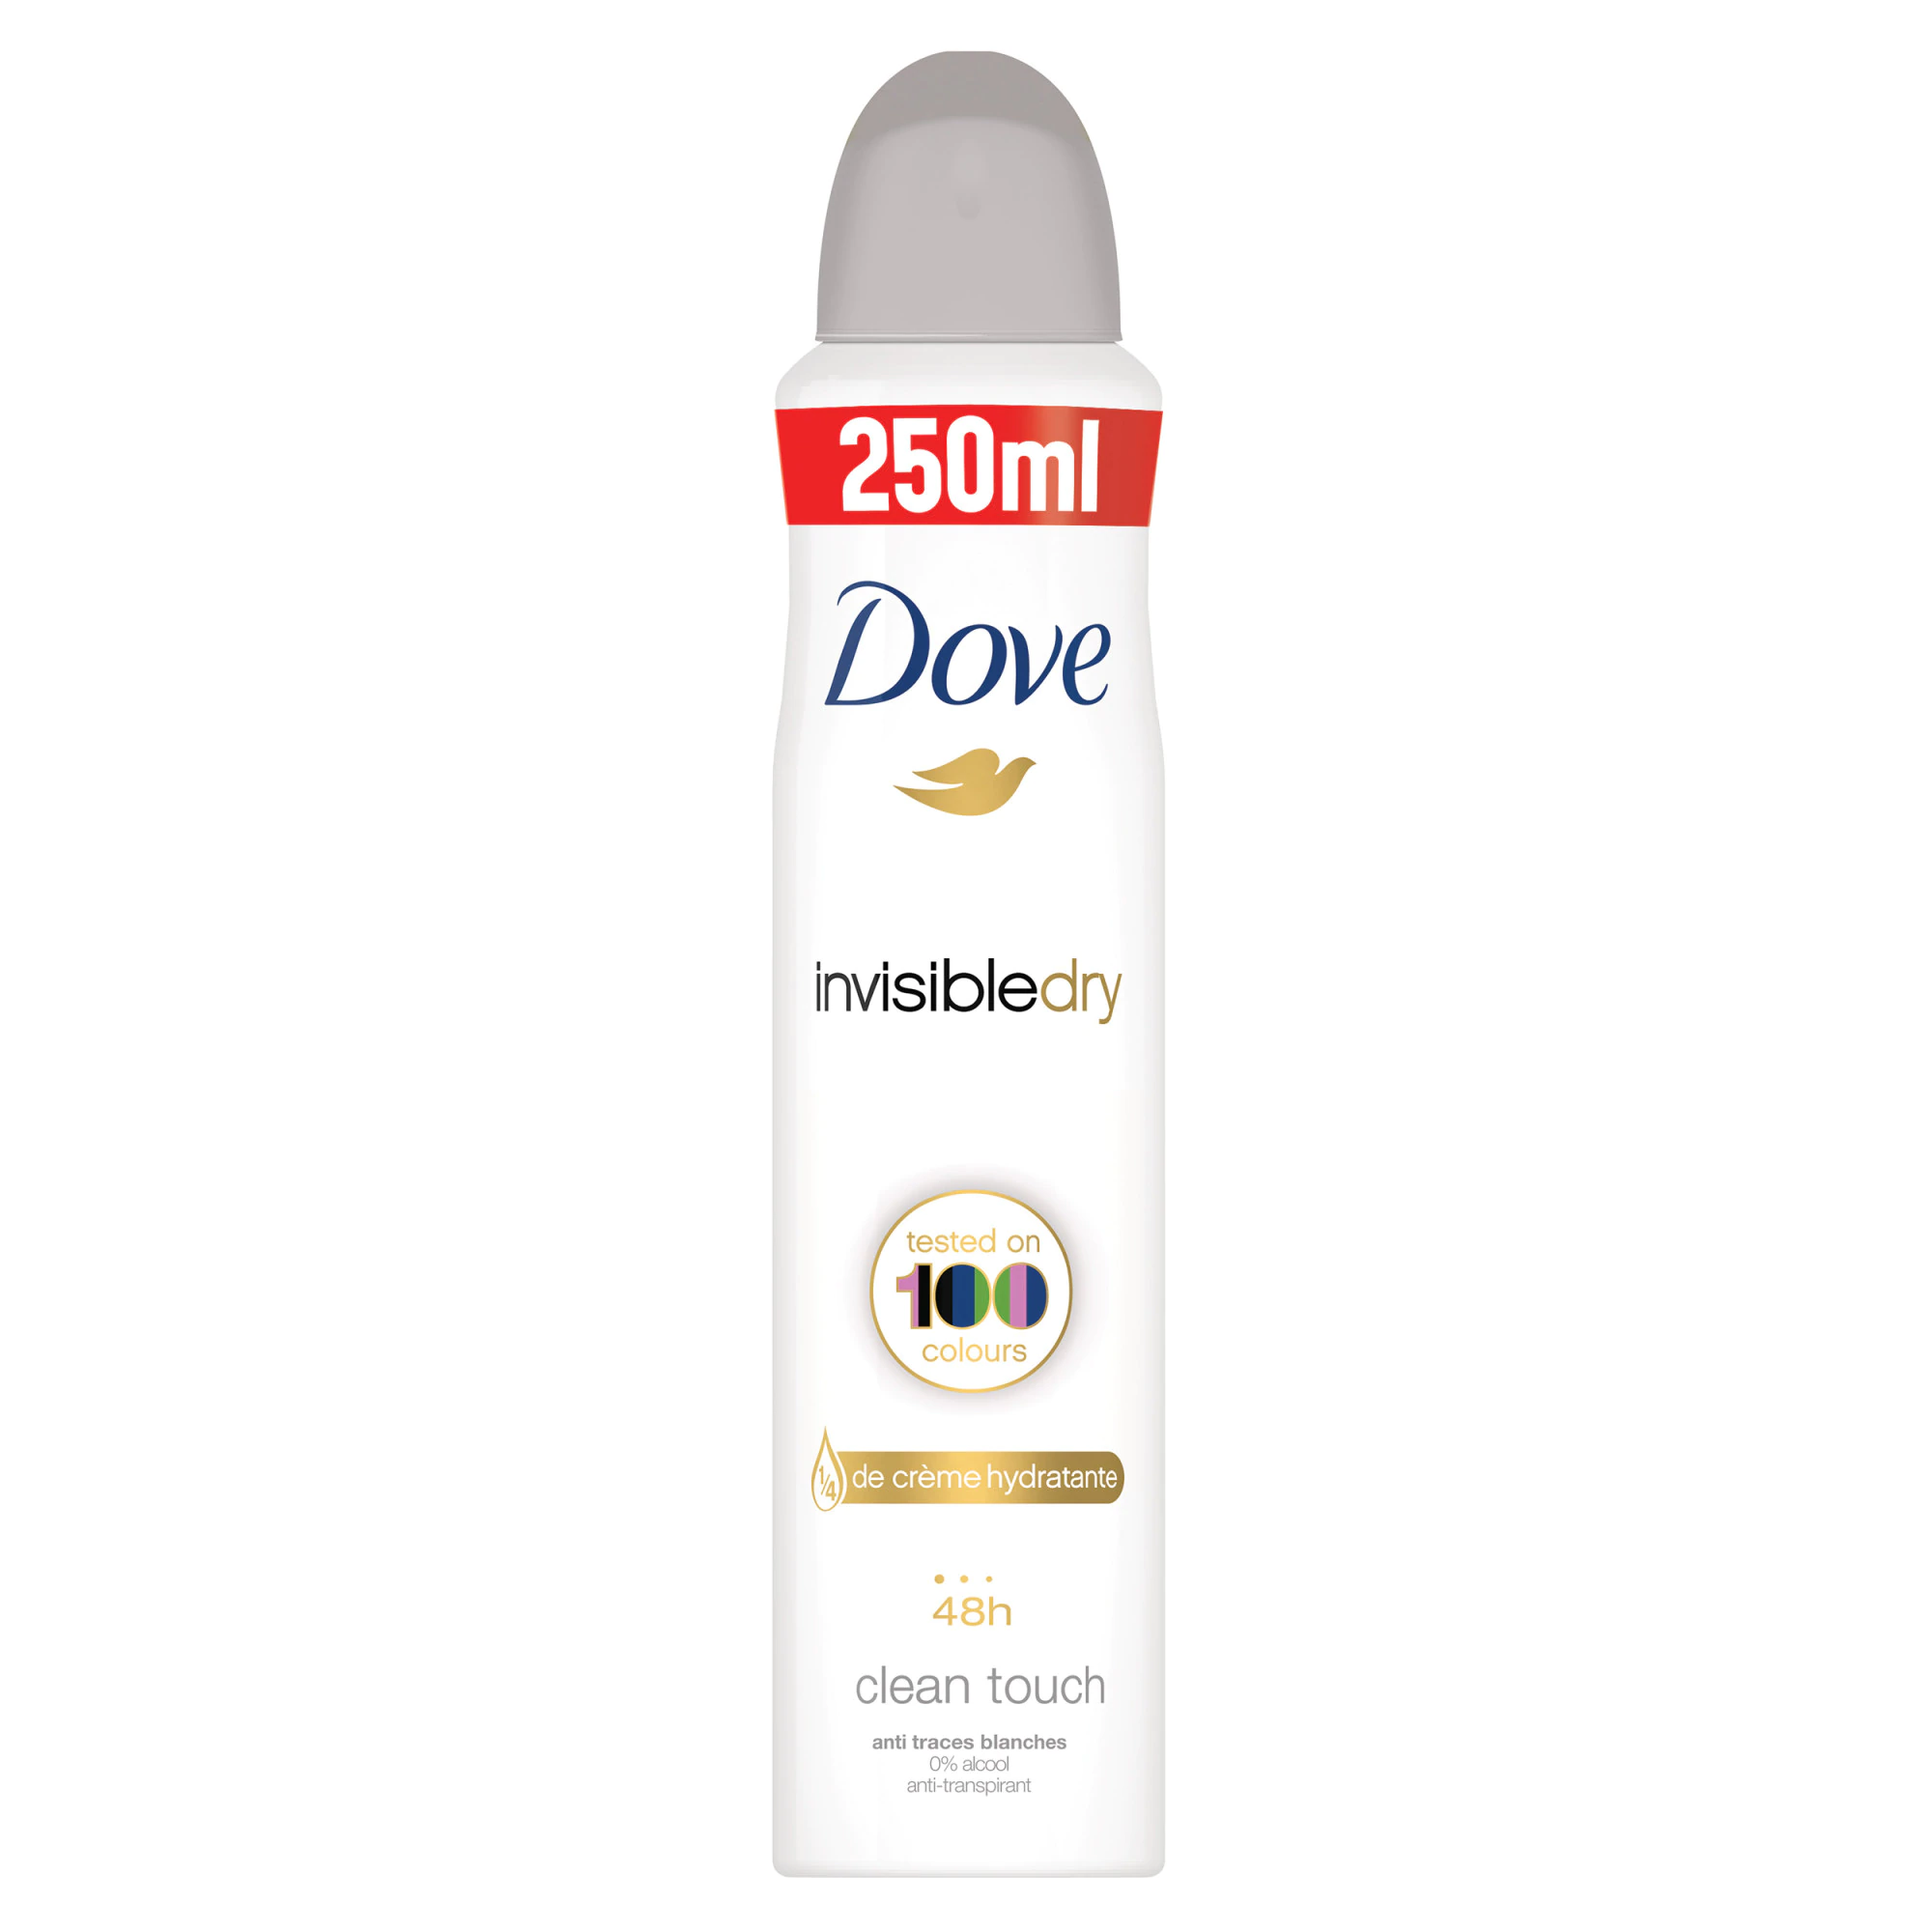 Dove Deo Invisible Dry 250ml [1]